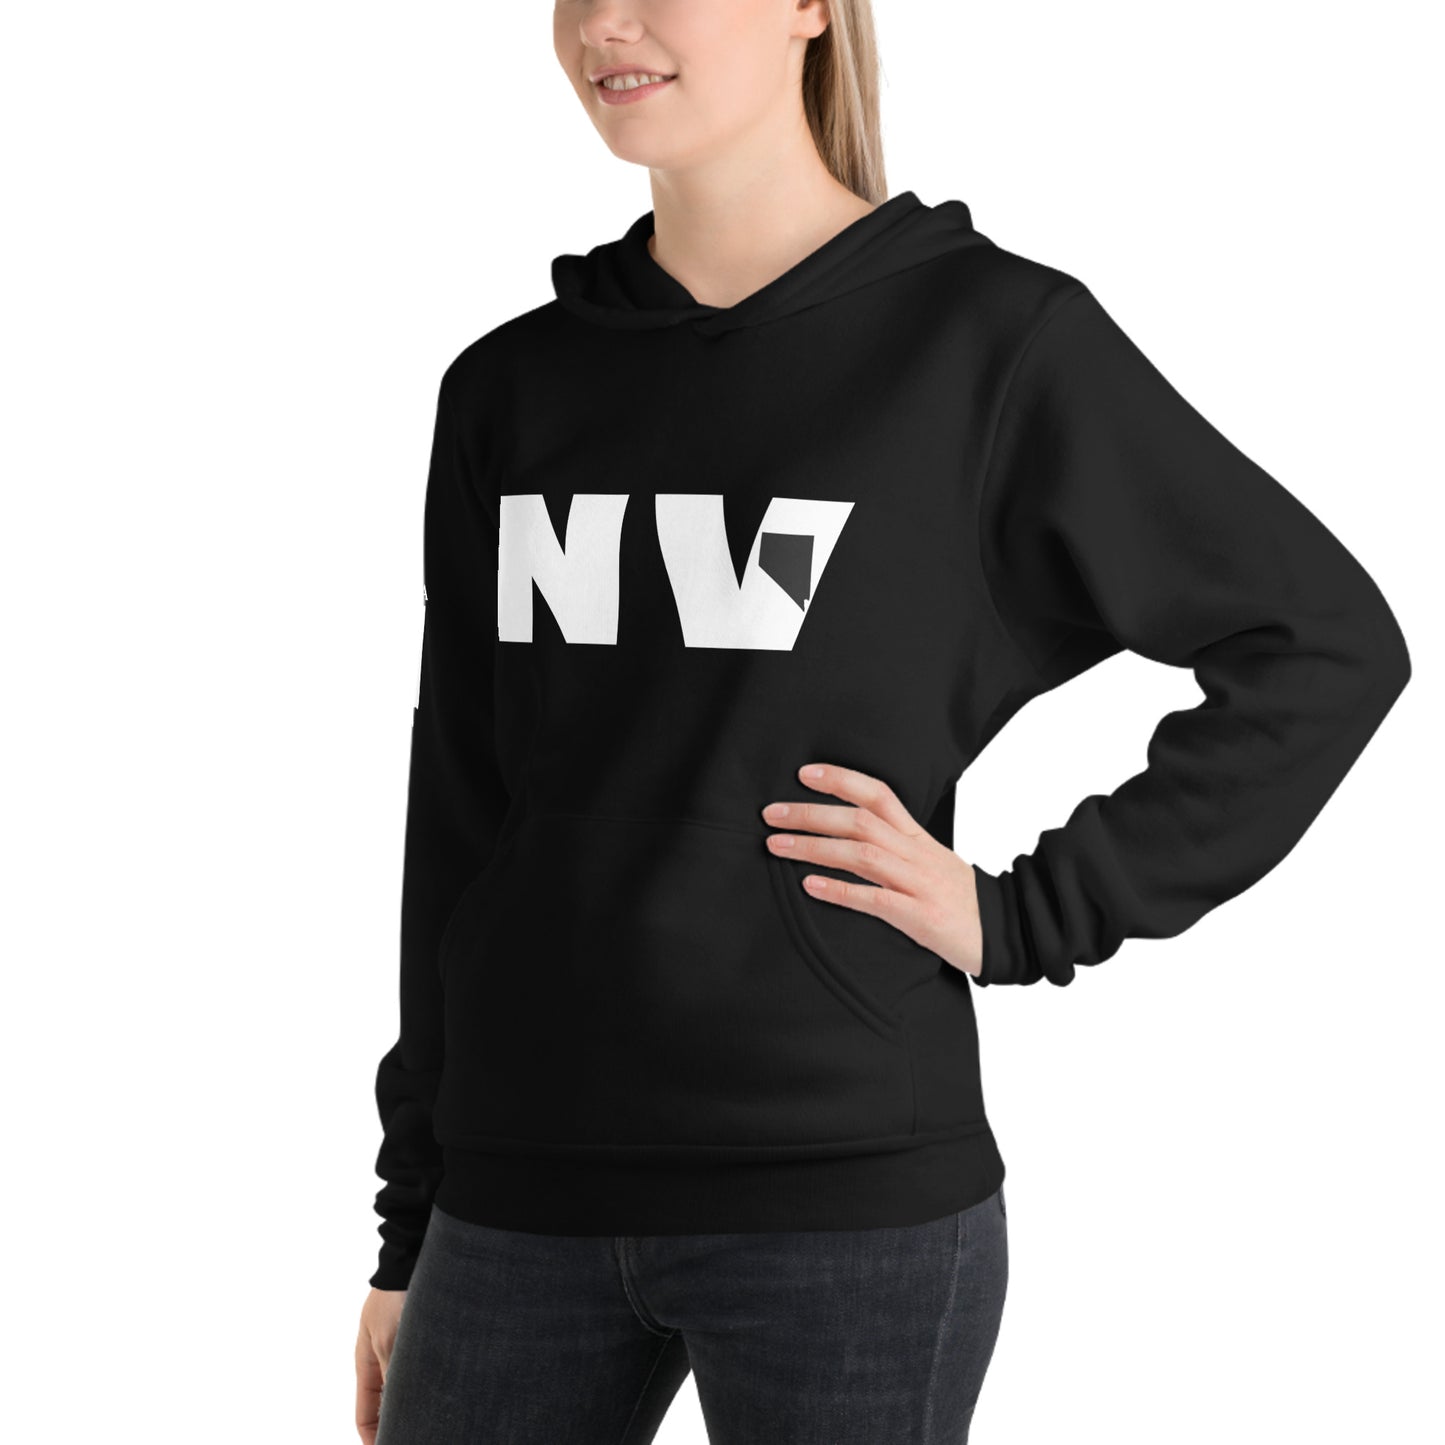 Unisex hoodie - NV (Nevada)